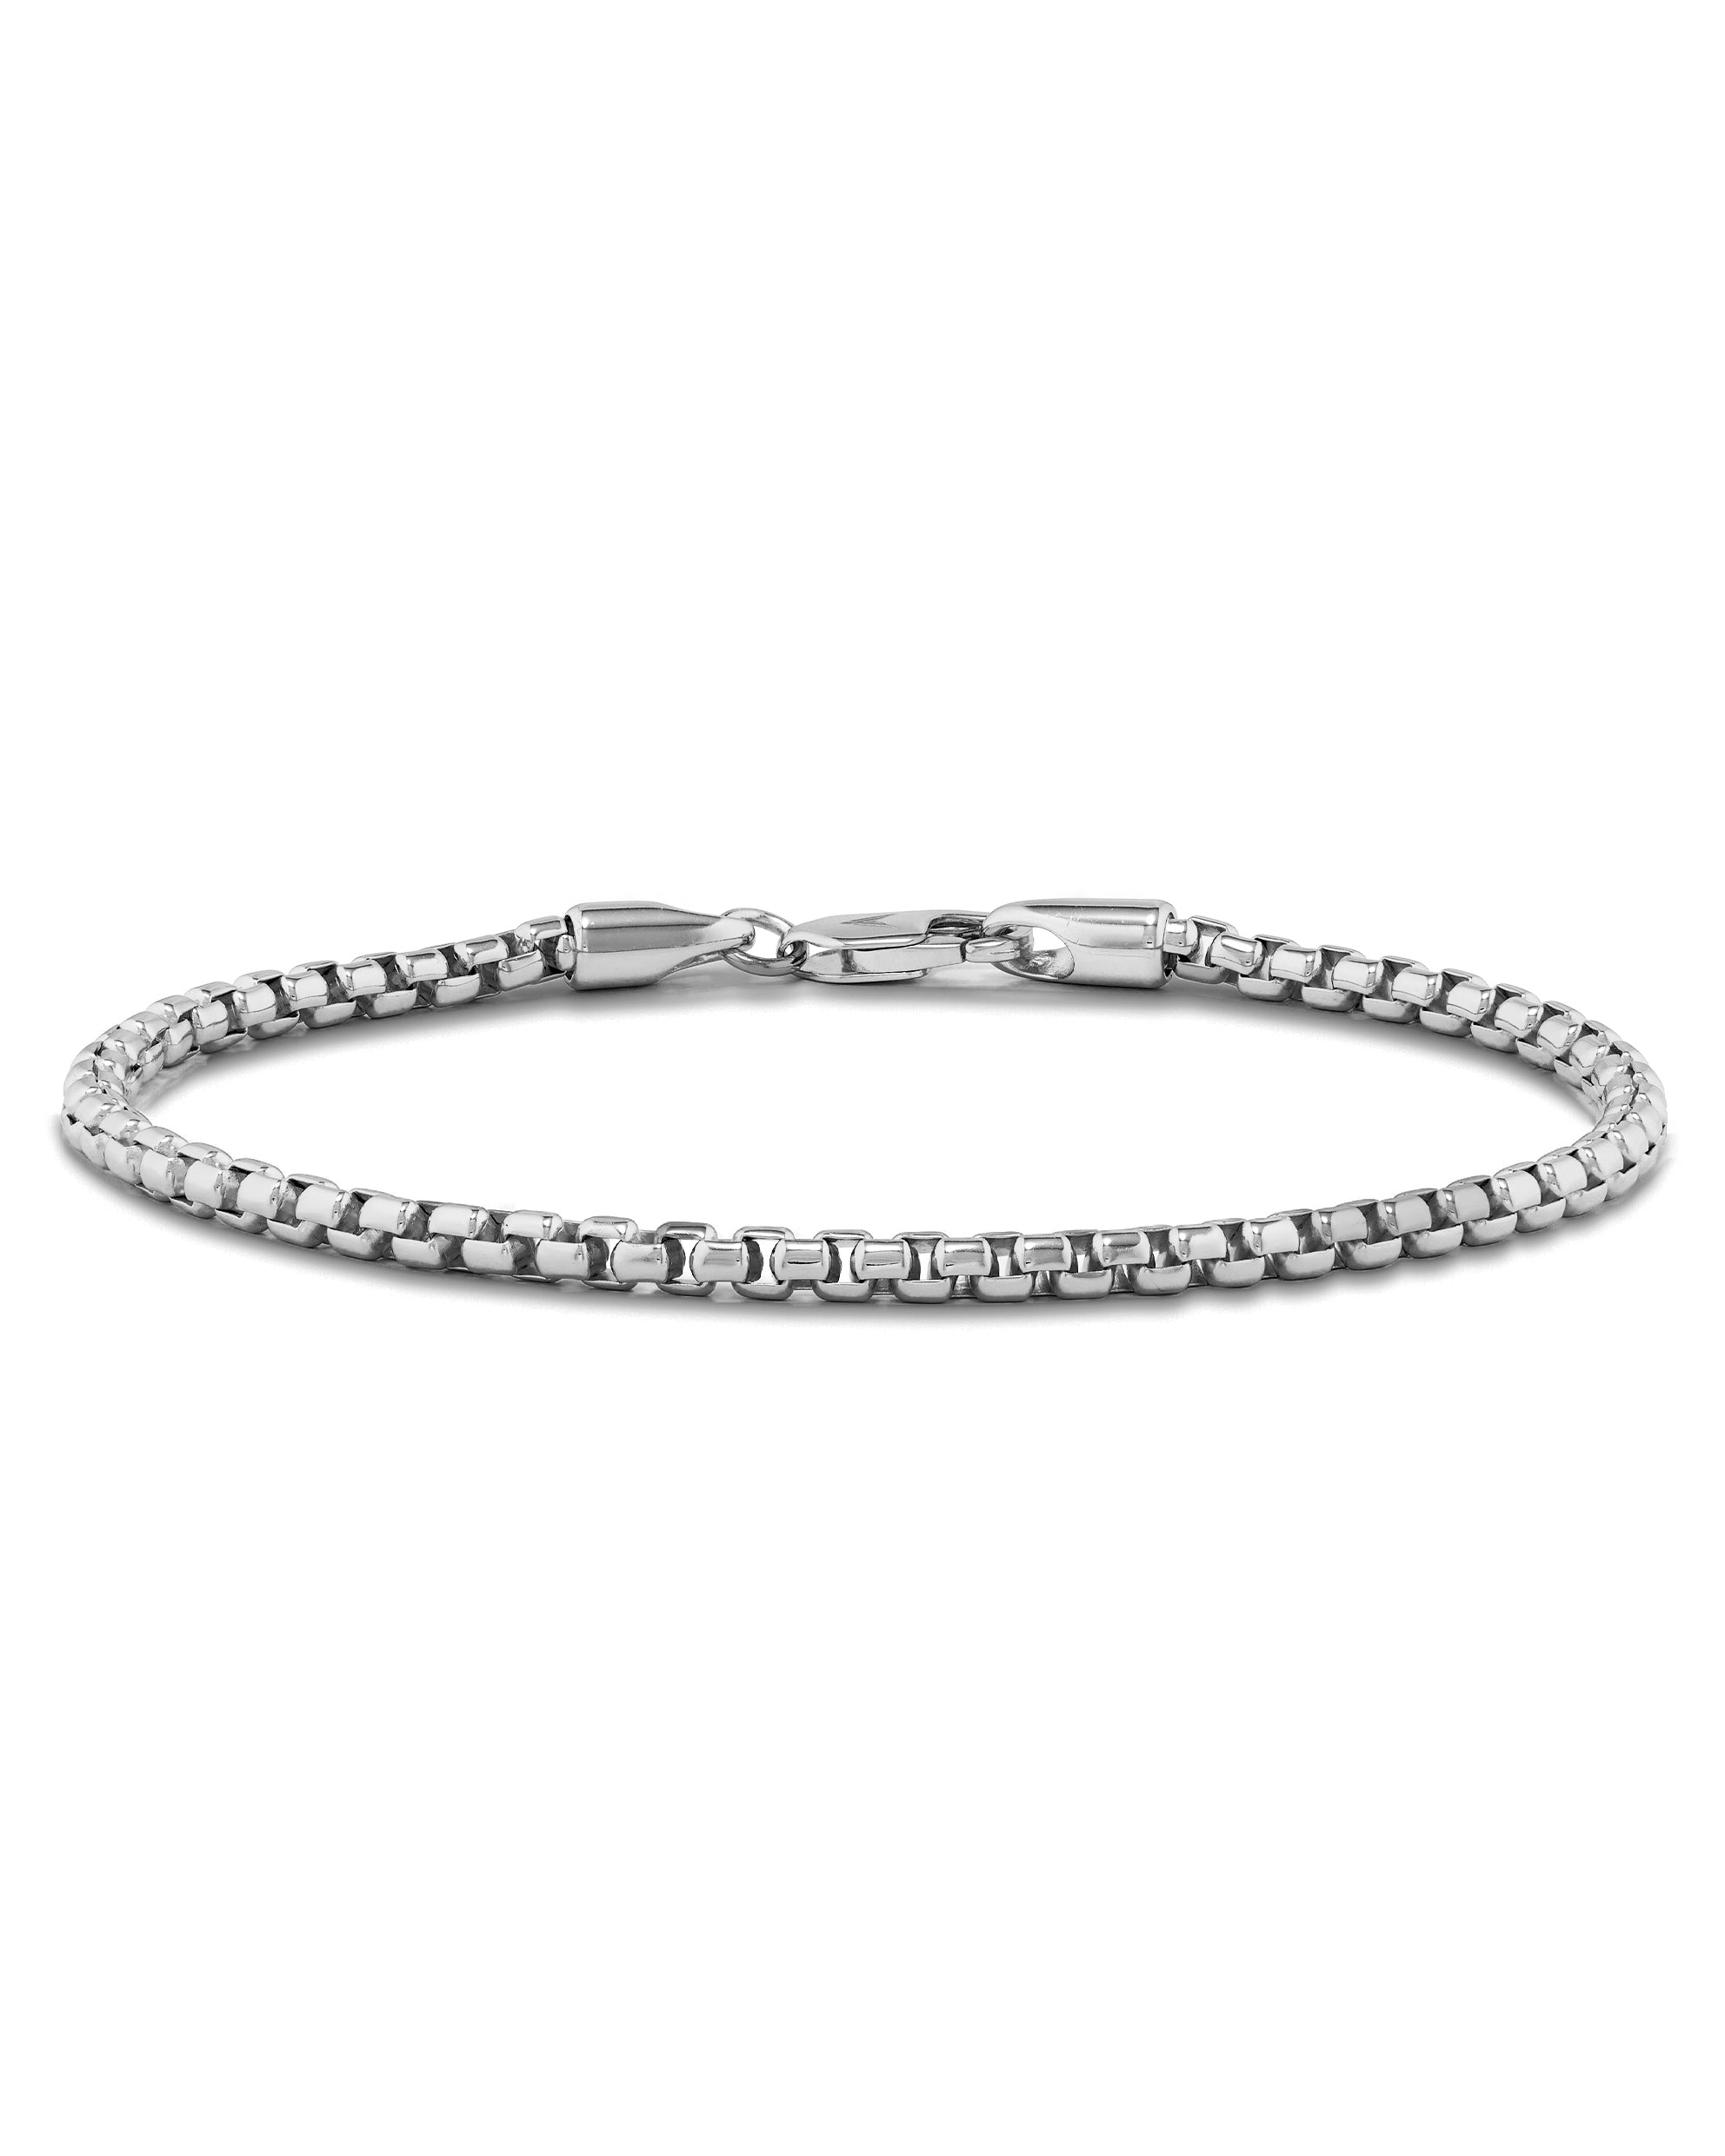 M Men Style Stainless Steel Sterling Silver Bracelet Price in